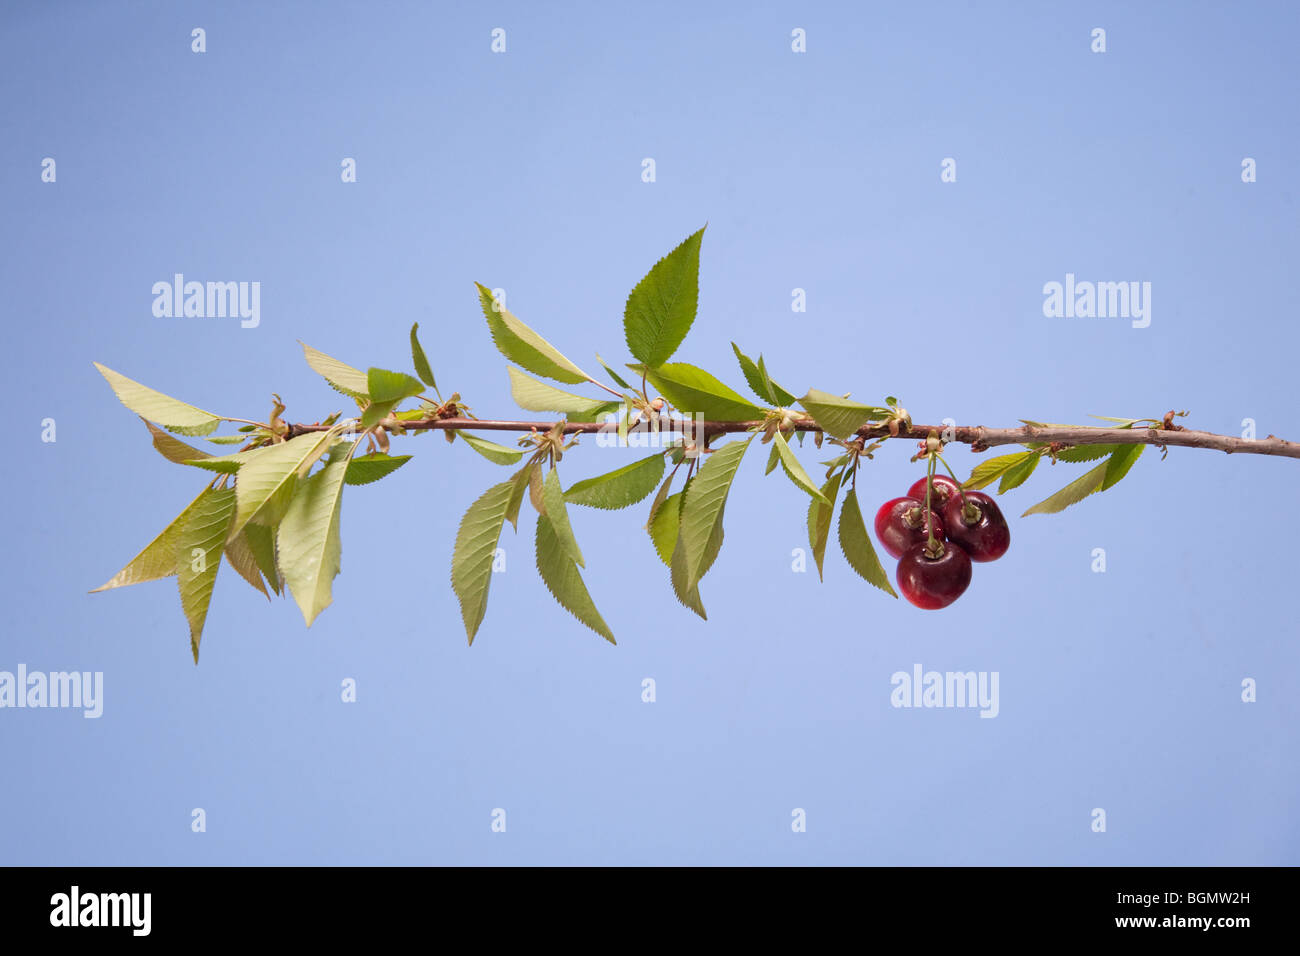 branch of cherry tree with ripe cherries Stock Photo